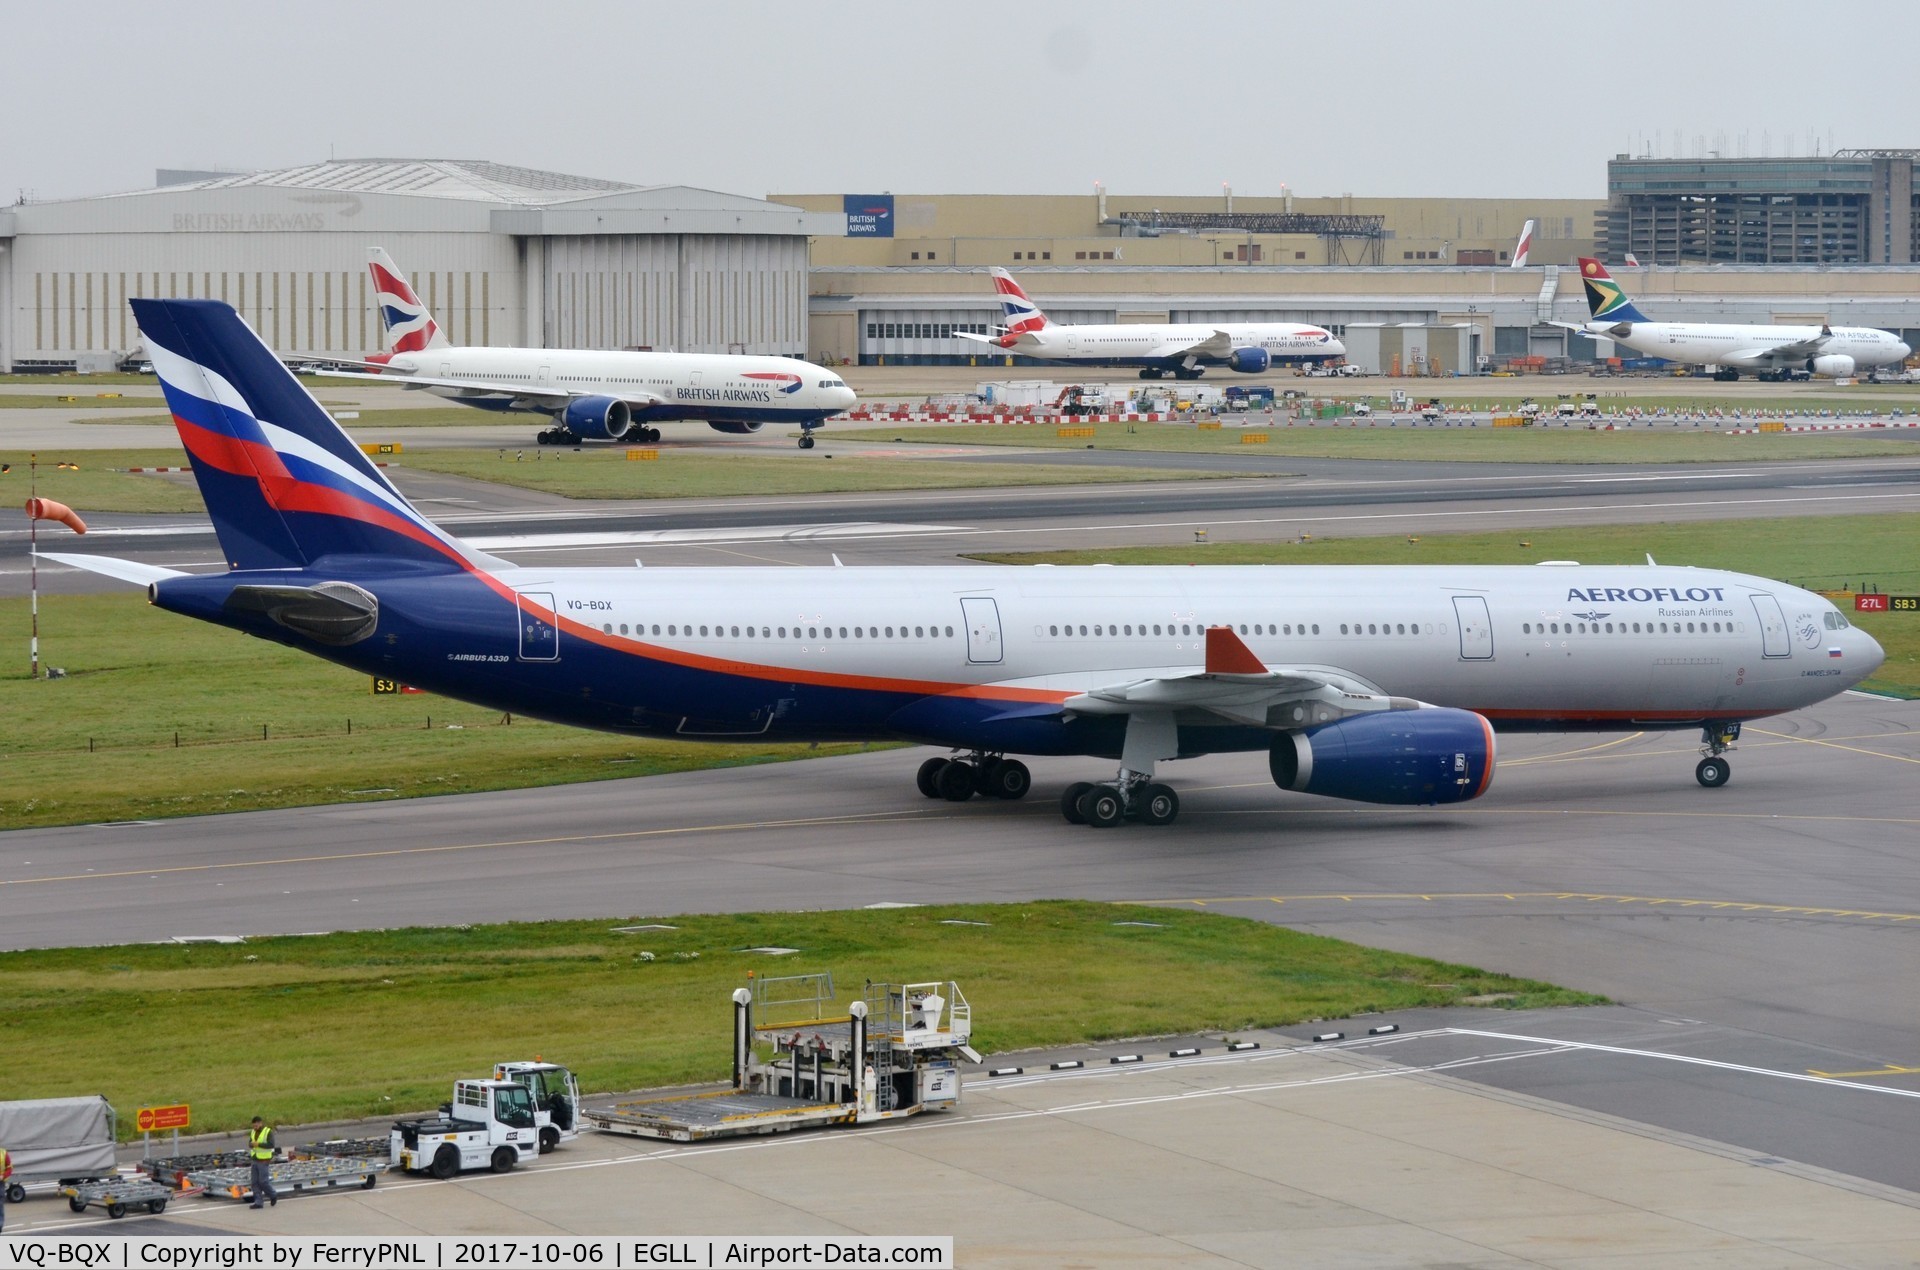 VQ-BQX, 2011 Airbus A330-343 C/N 1232, Aeroflot A333 taxying to its gate at T4